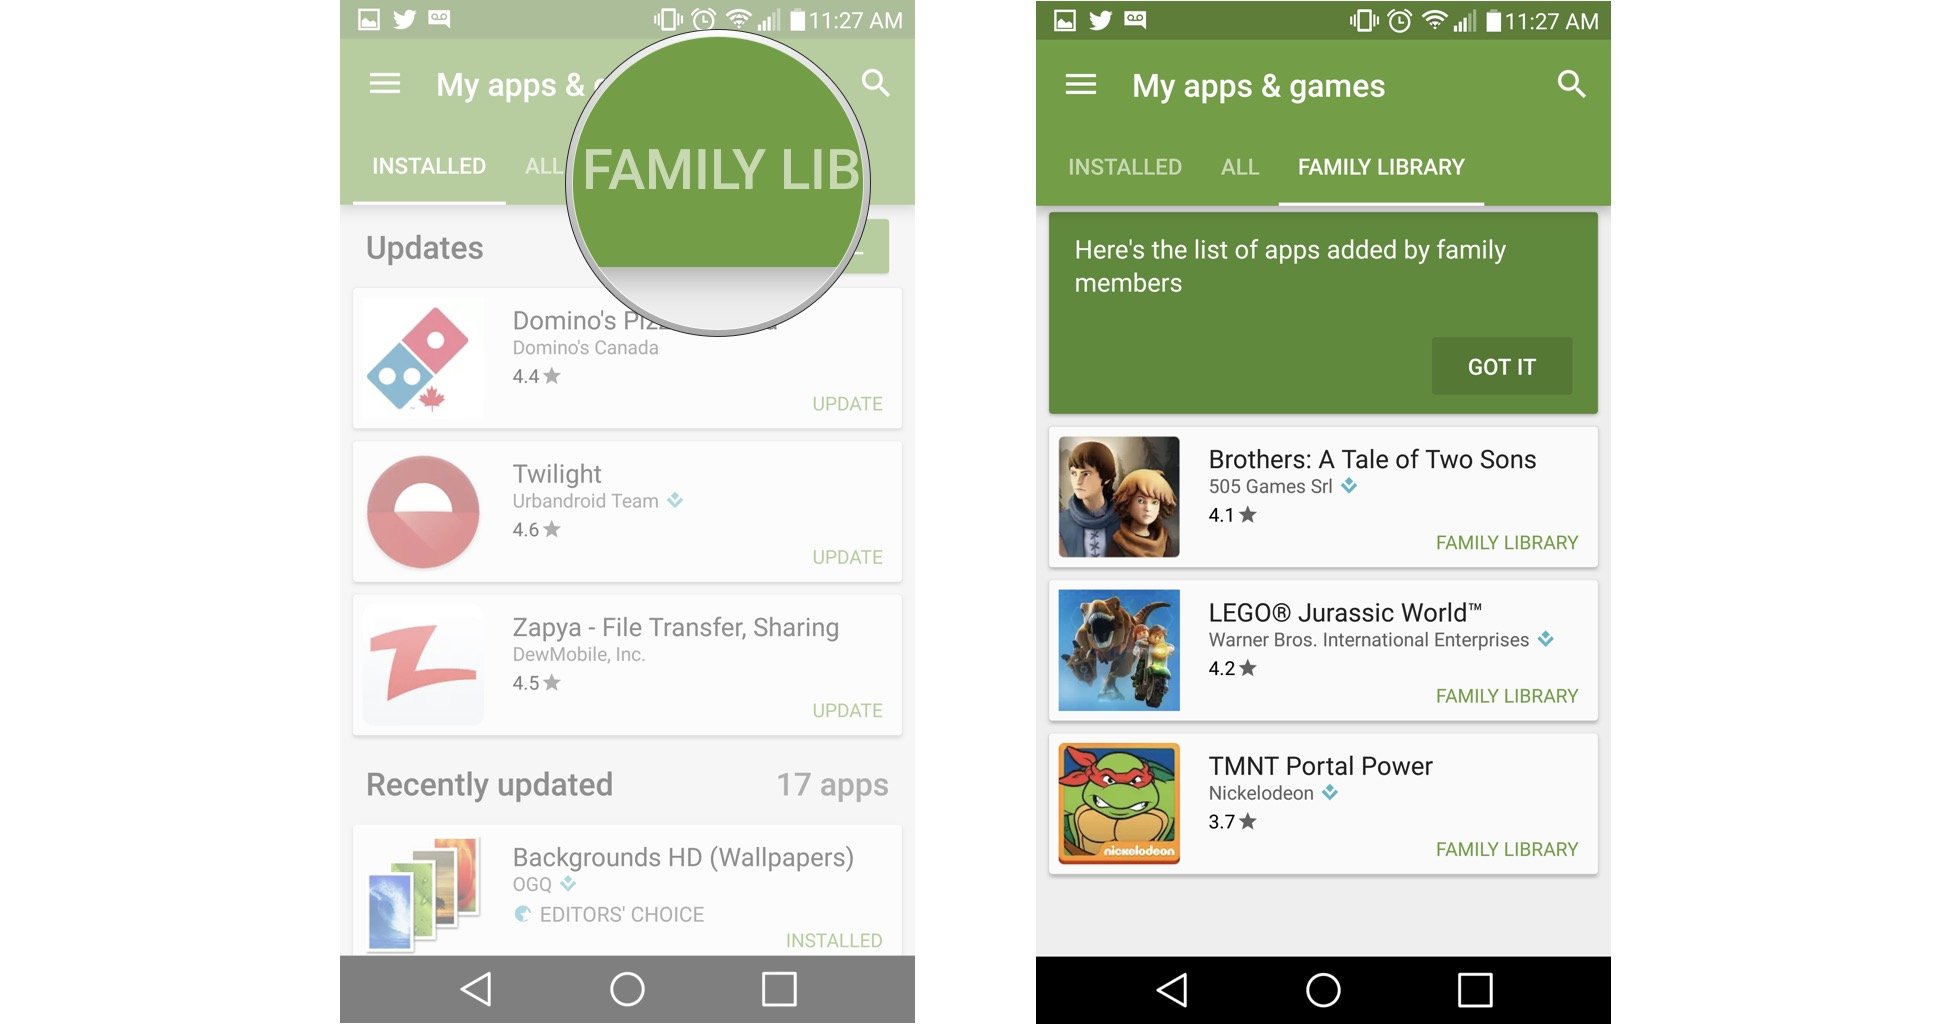 Family library sharing игры. Семейная библиотека Google Play. Библиотека в гугл плей. Google Play библиотека приложений. Библиотека приложений в плей Маркете.